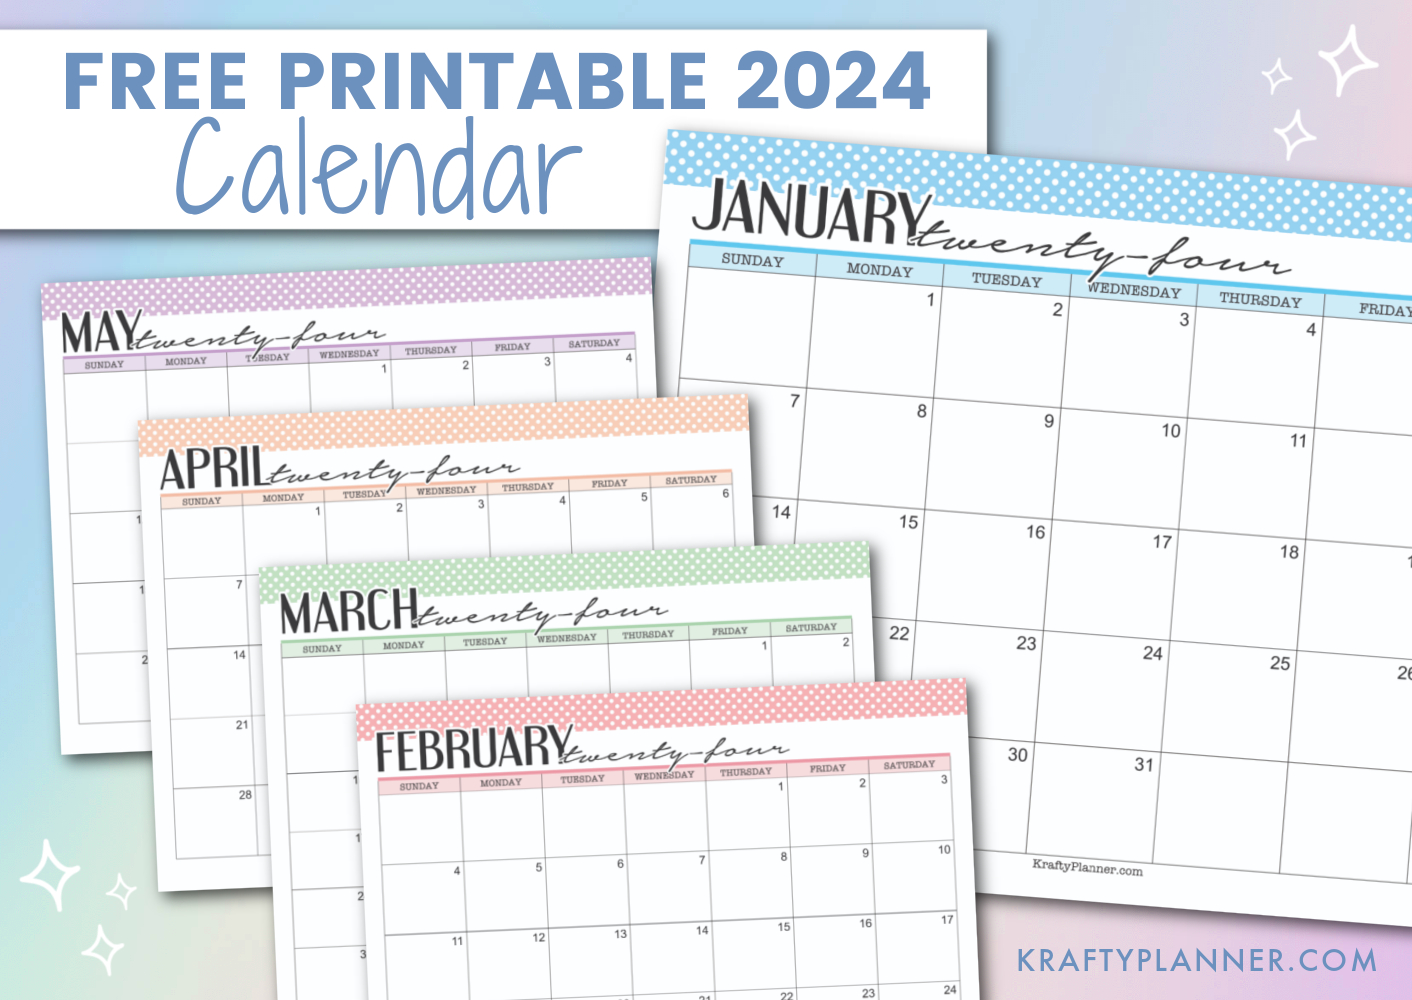 Free Printable 2024 Calendars (Color) — Krafty Planner | Printable Coloring Calendar 2024